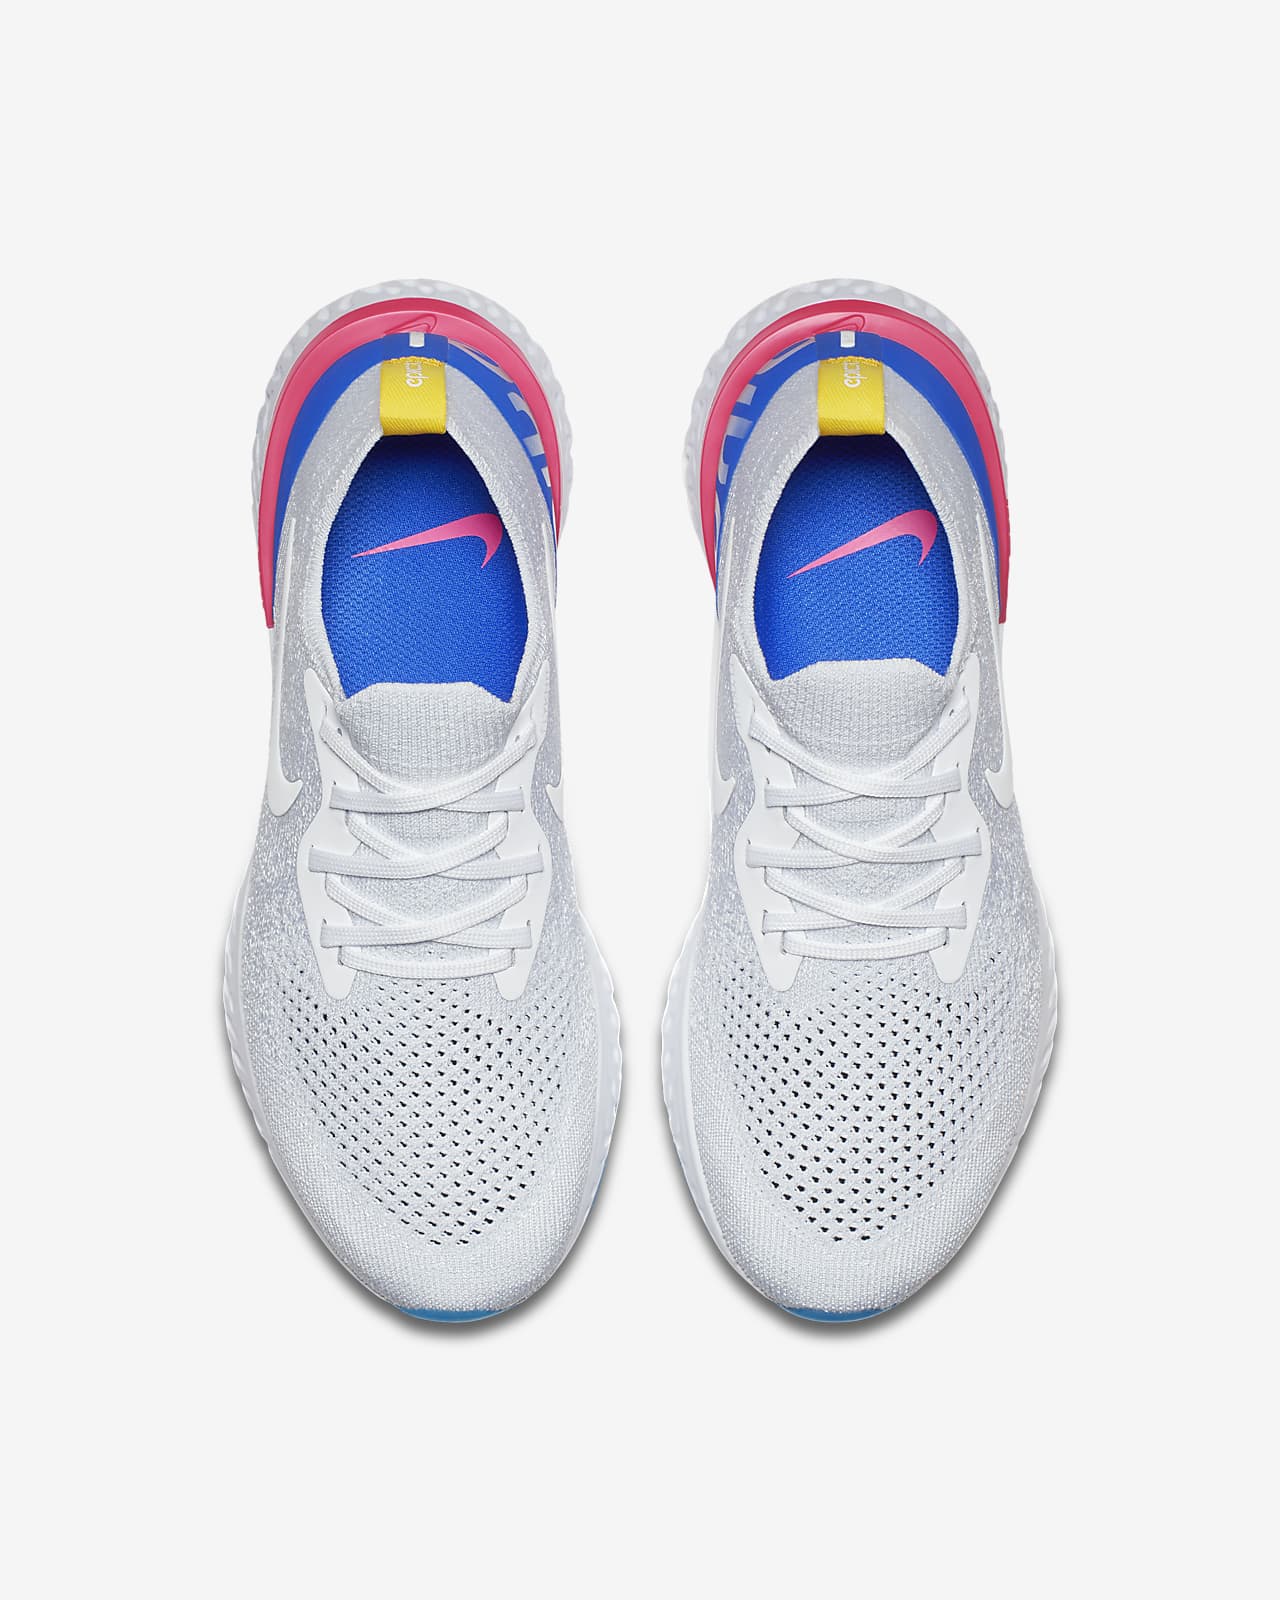 Nike Epic Flyknit Running Shoe. ID